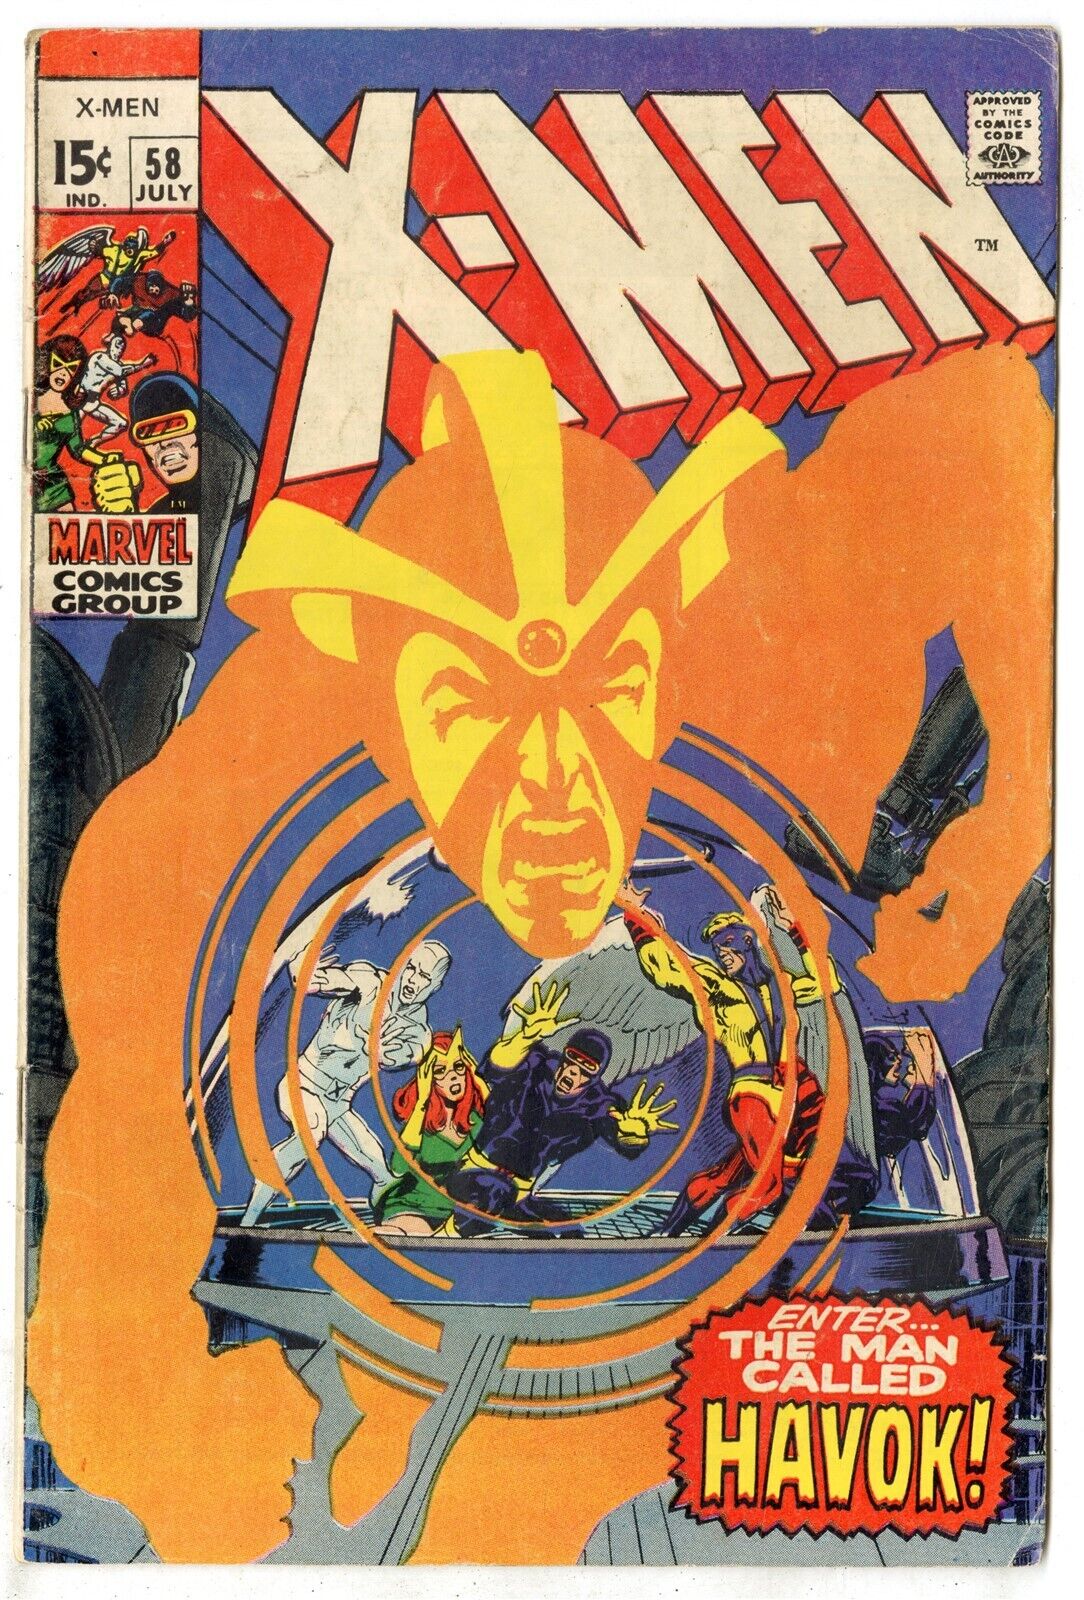 XMen 58 VG 35 owwhite pages  1st Havok in Costume  Neal Adams  Marvel  1969